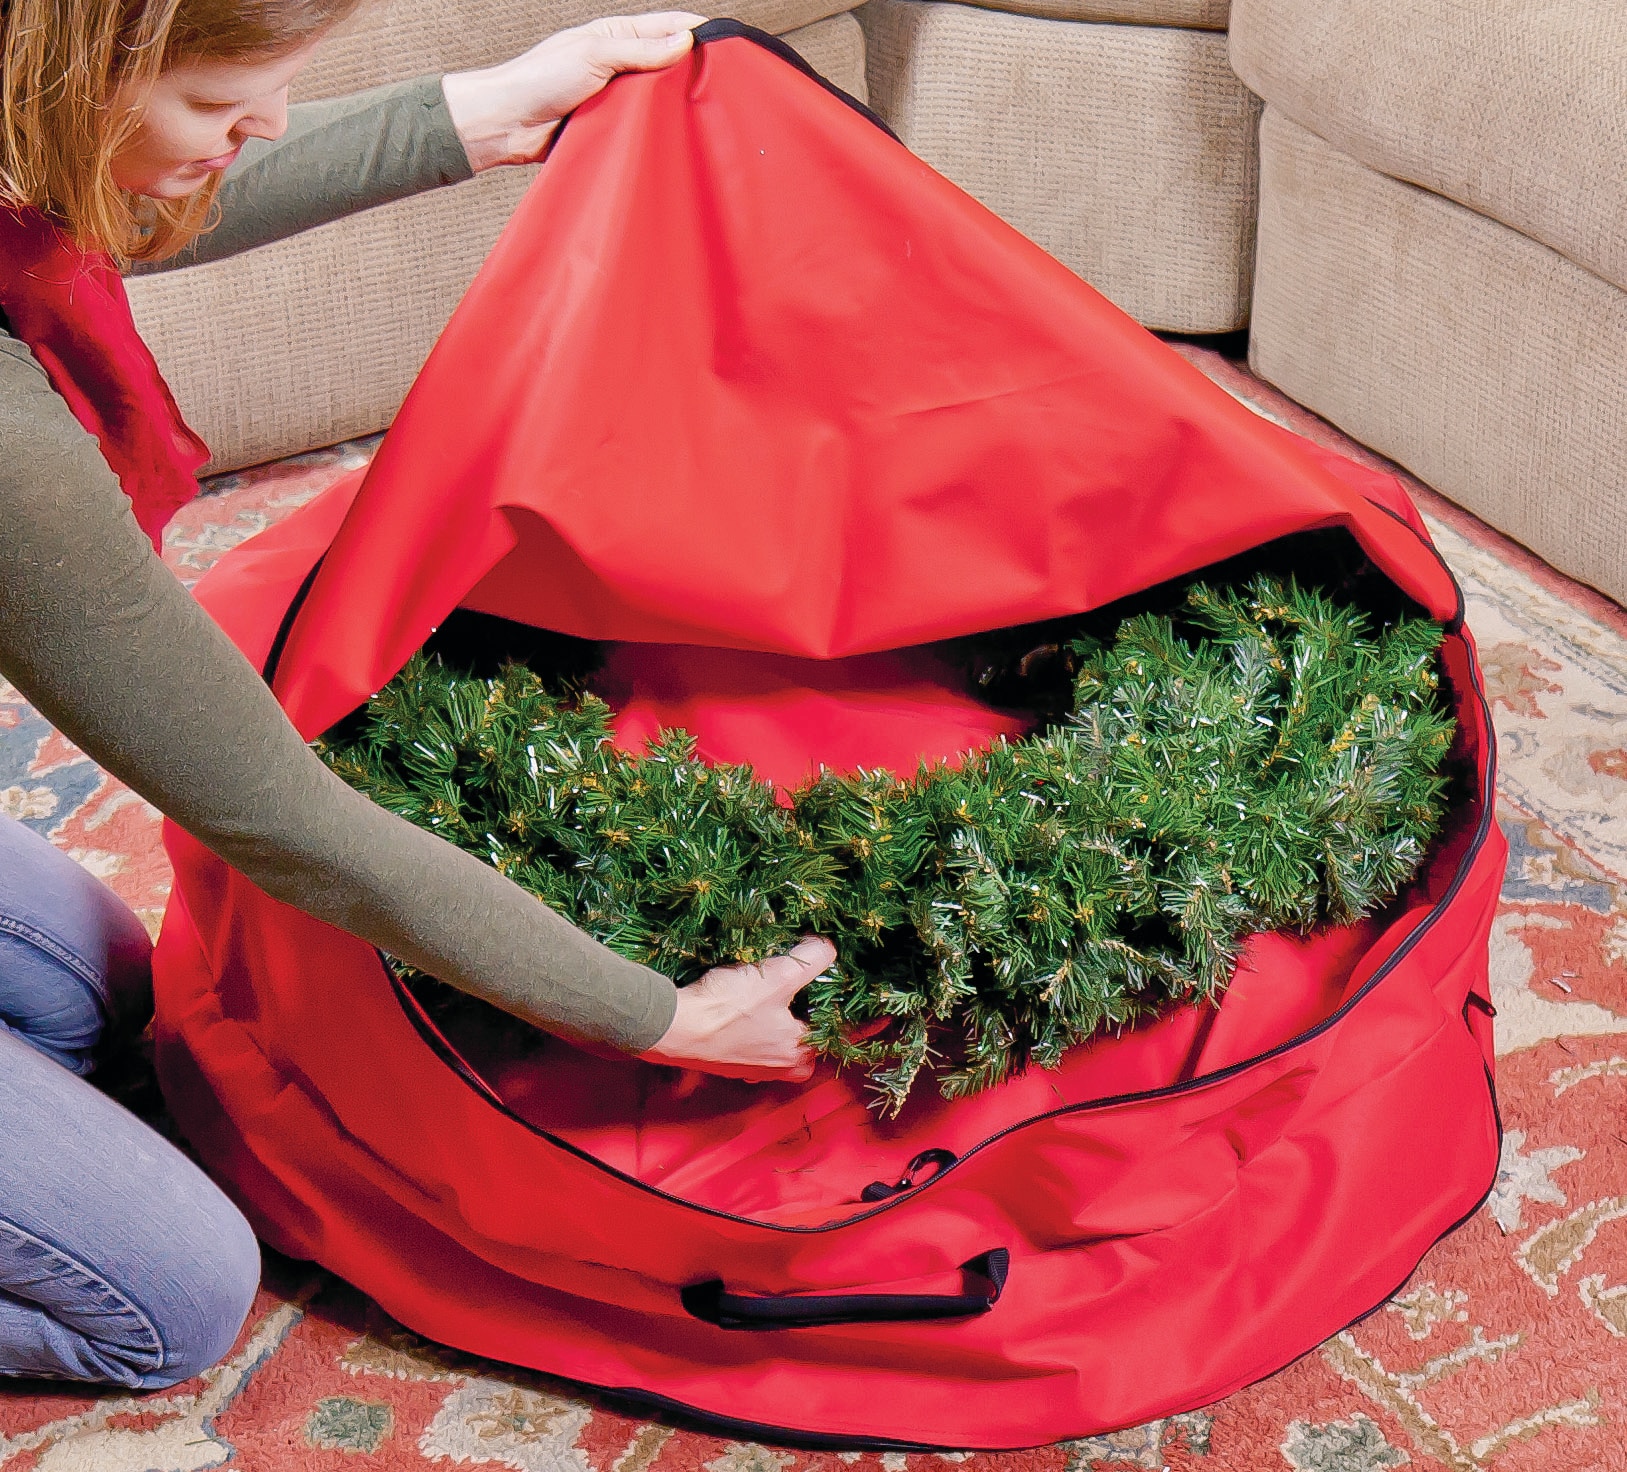 The Holiday Aisle® Christmas Tree Storage With Wreath Storage Bag